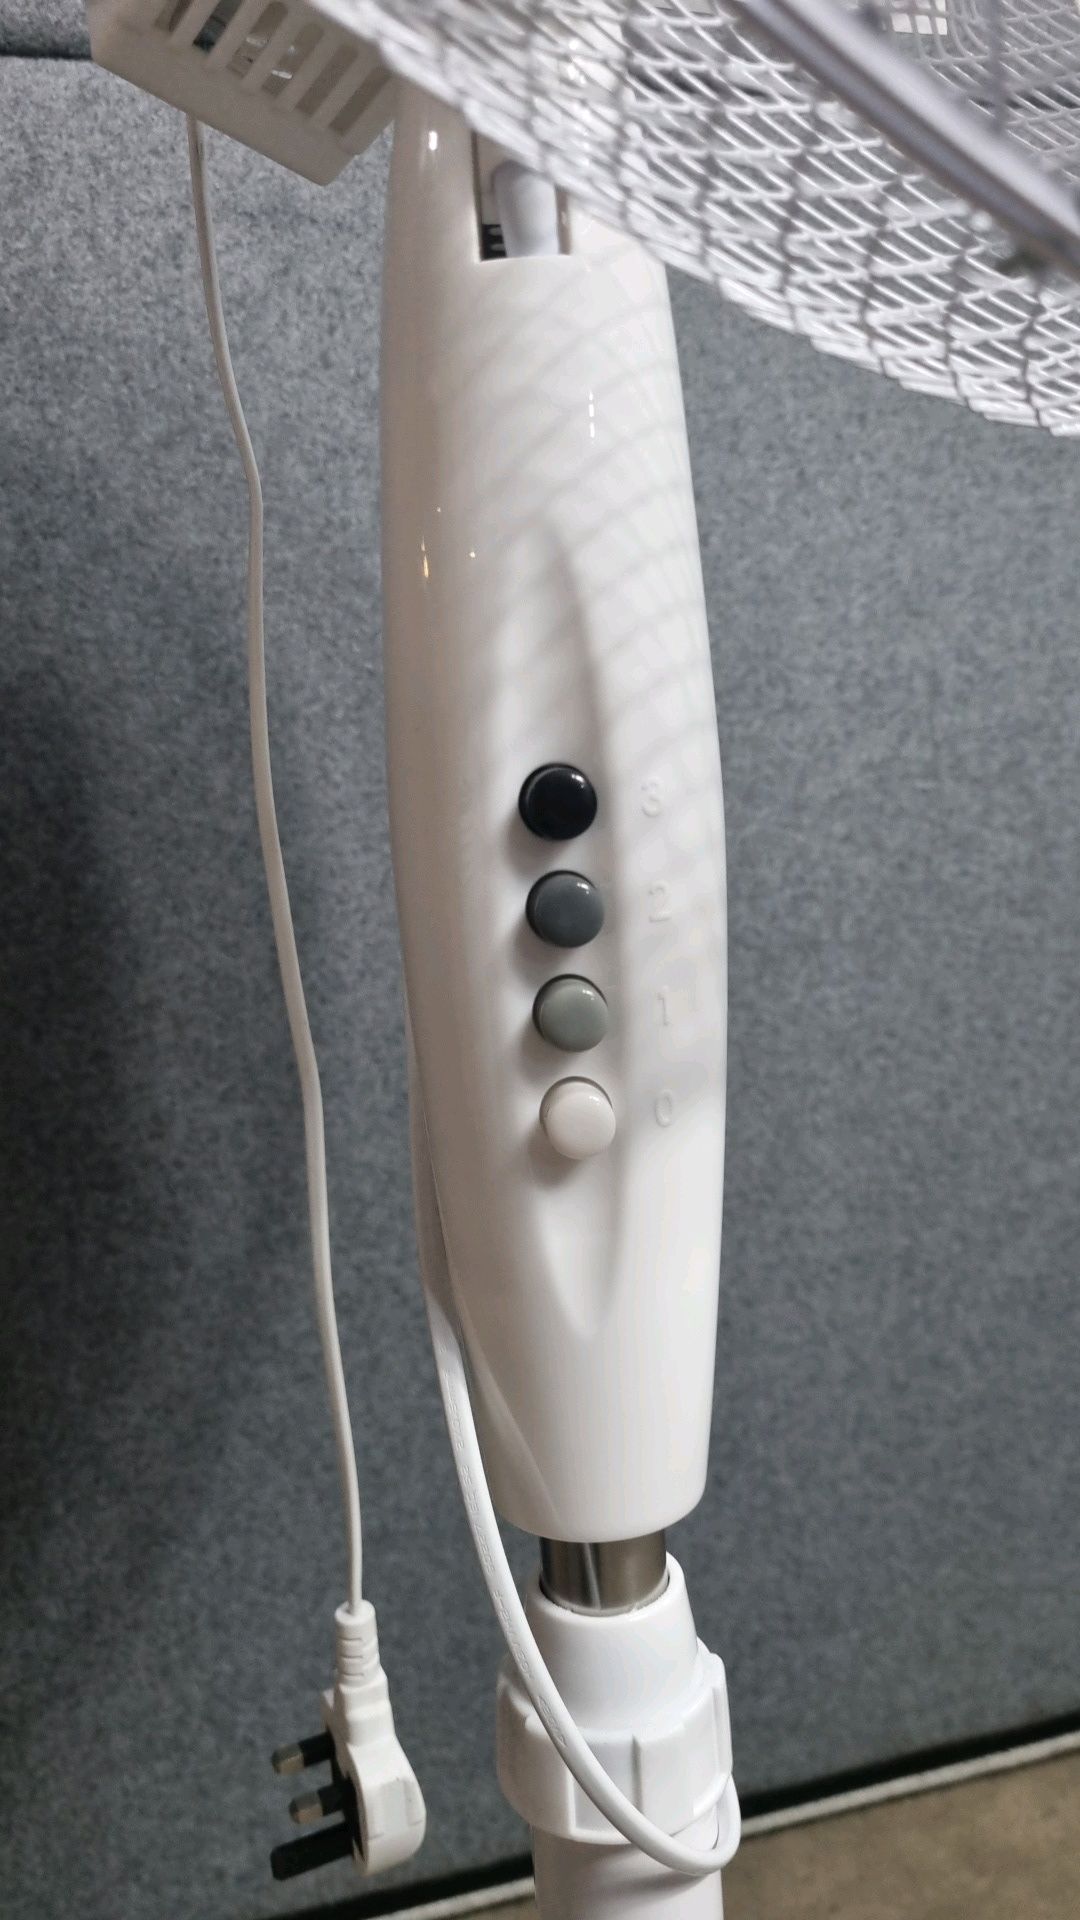 Electric Oscillating pedestal Cooling Fan - Image 2 of 2